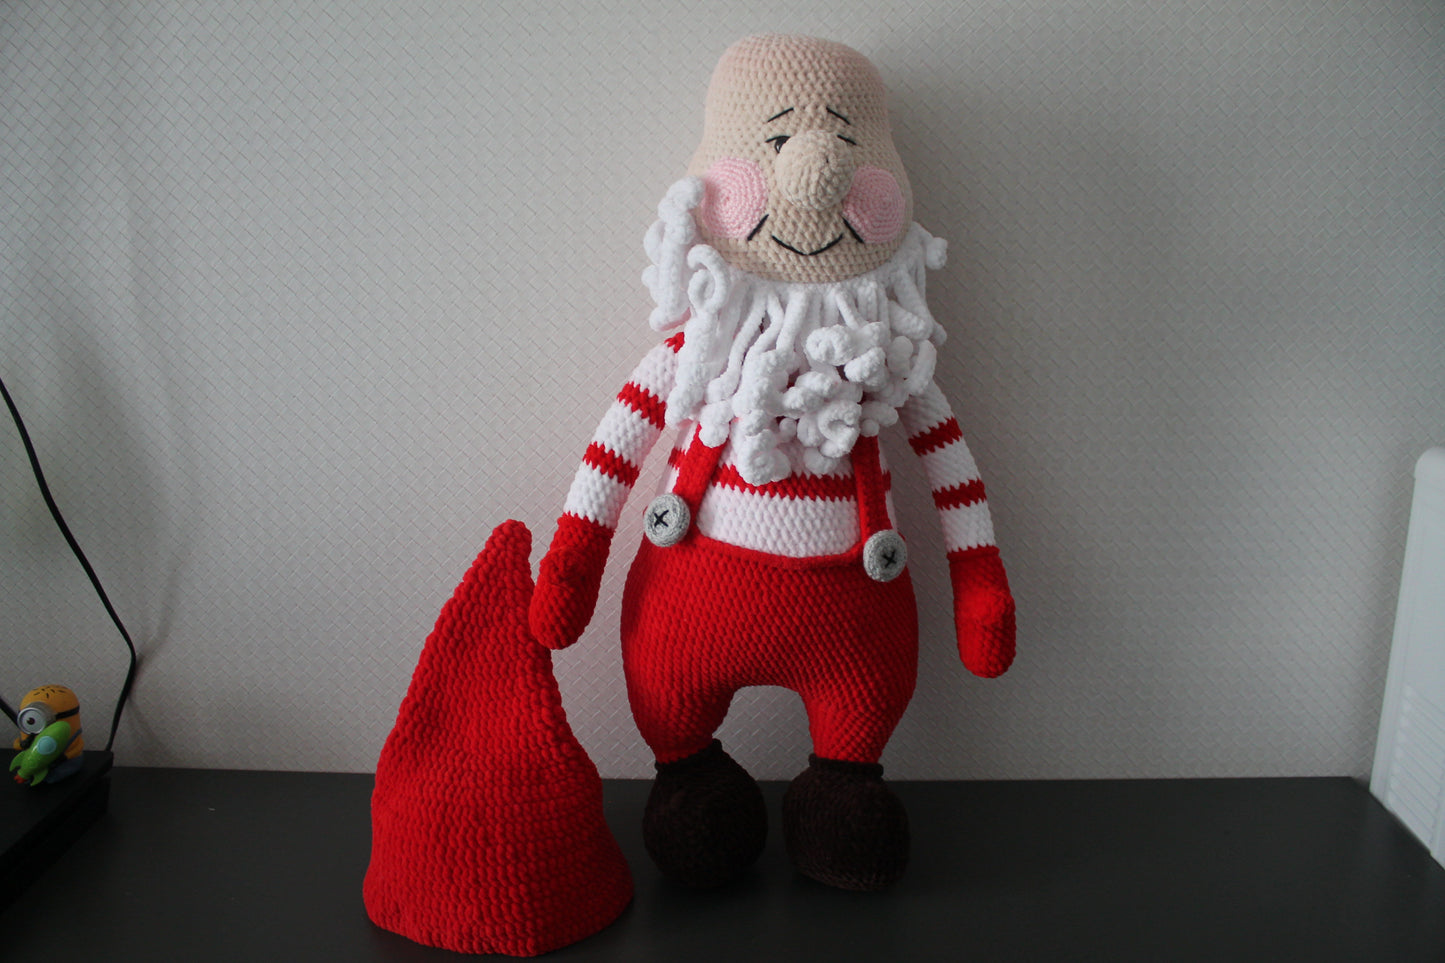 Dwarf knitted soft toy